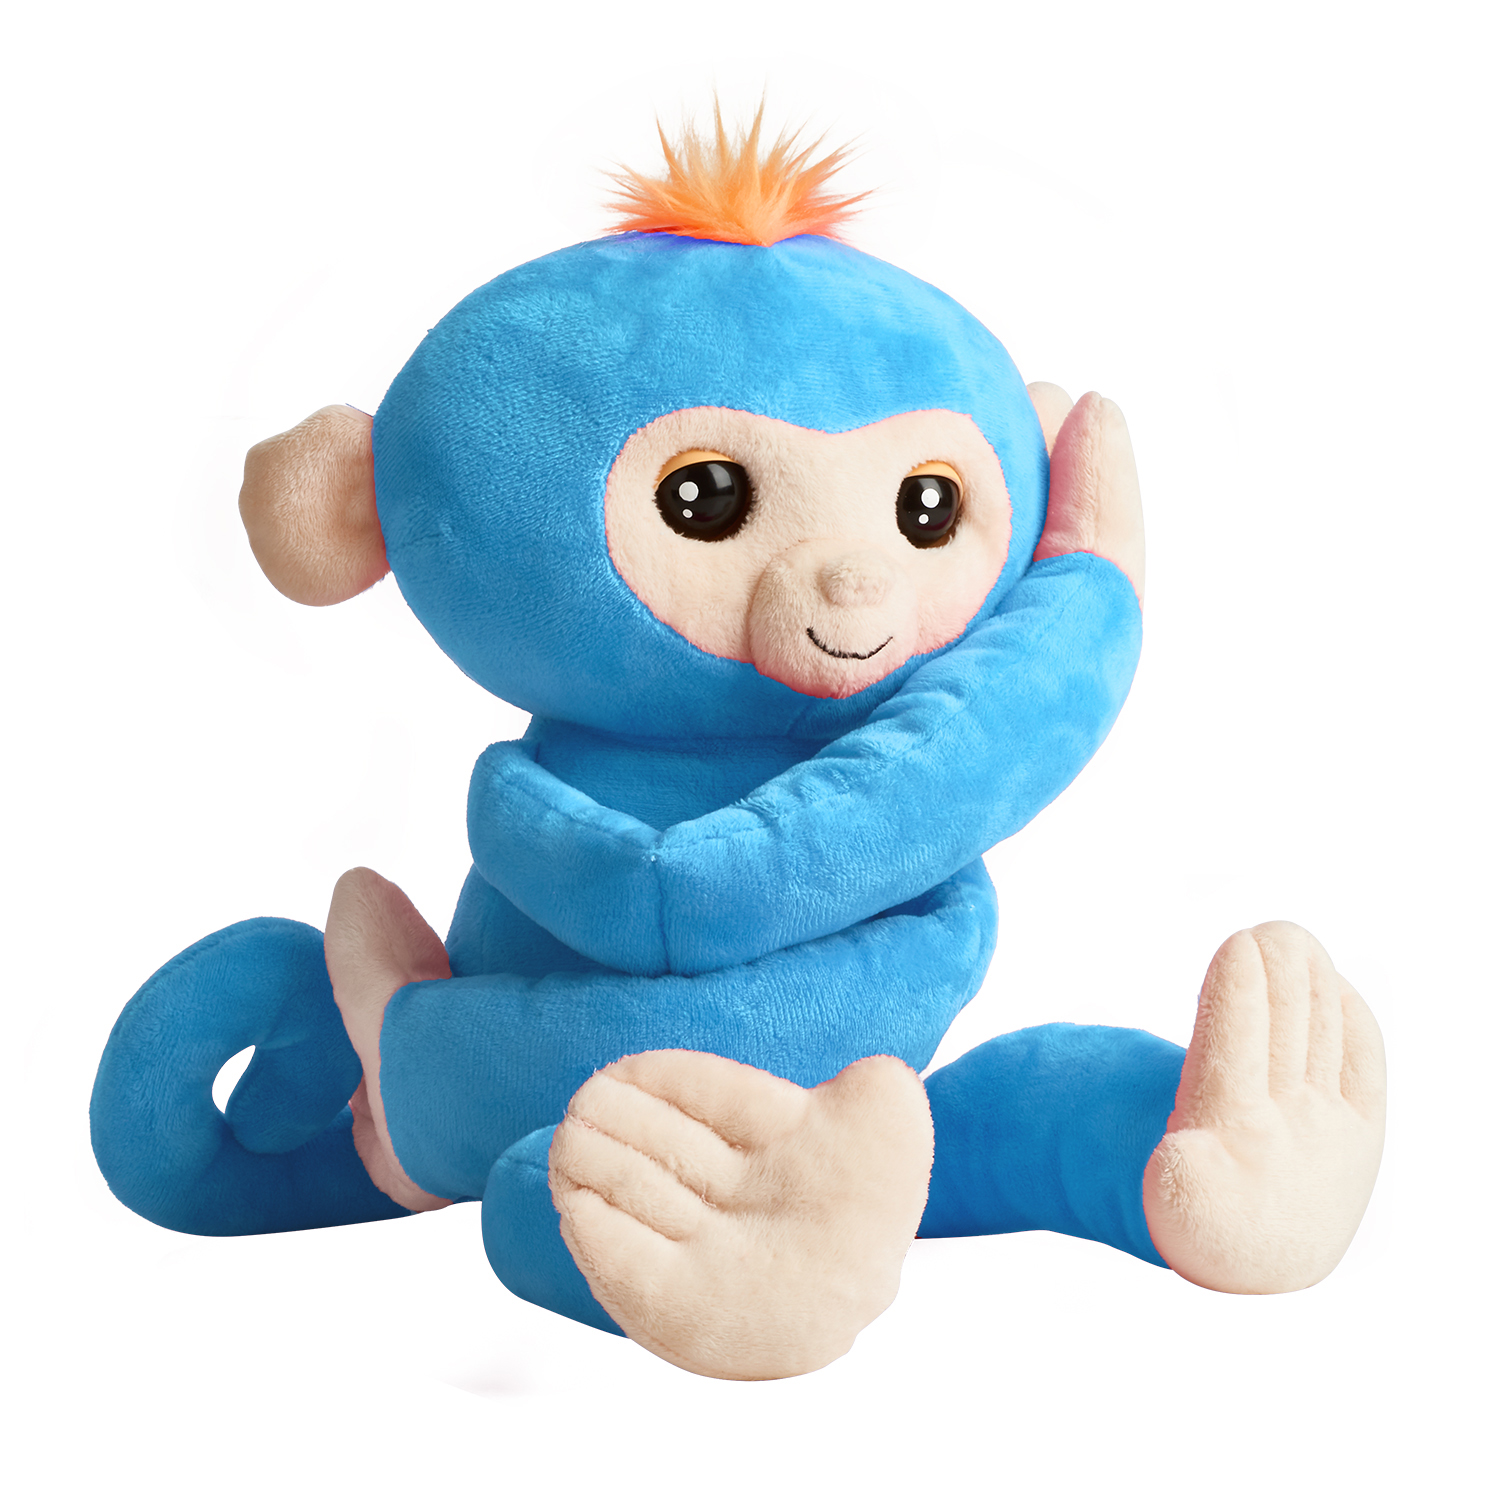 Fingerlings HUGS - Boris (Blue) - Advanced Interactive Plush Baby Monkey Pet - by WowWee - image 1 of 14